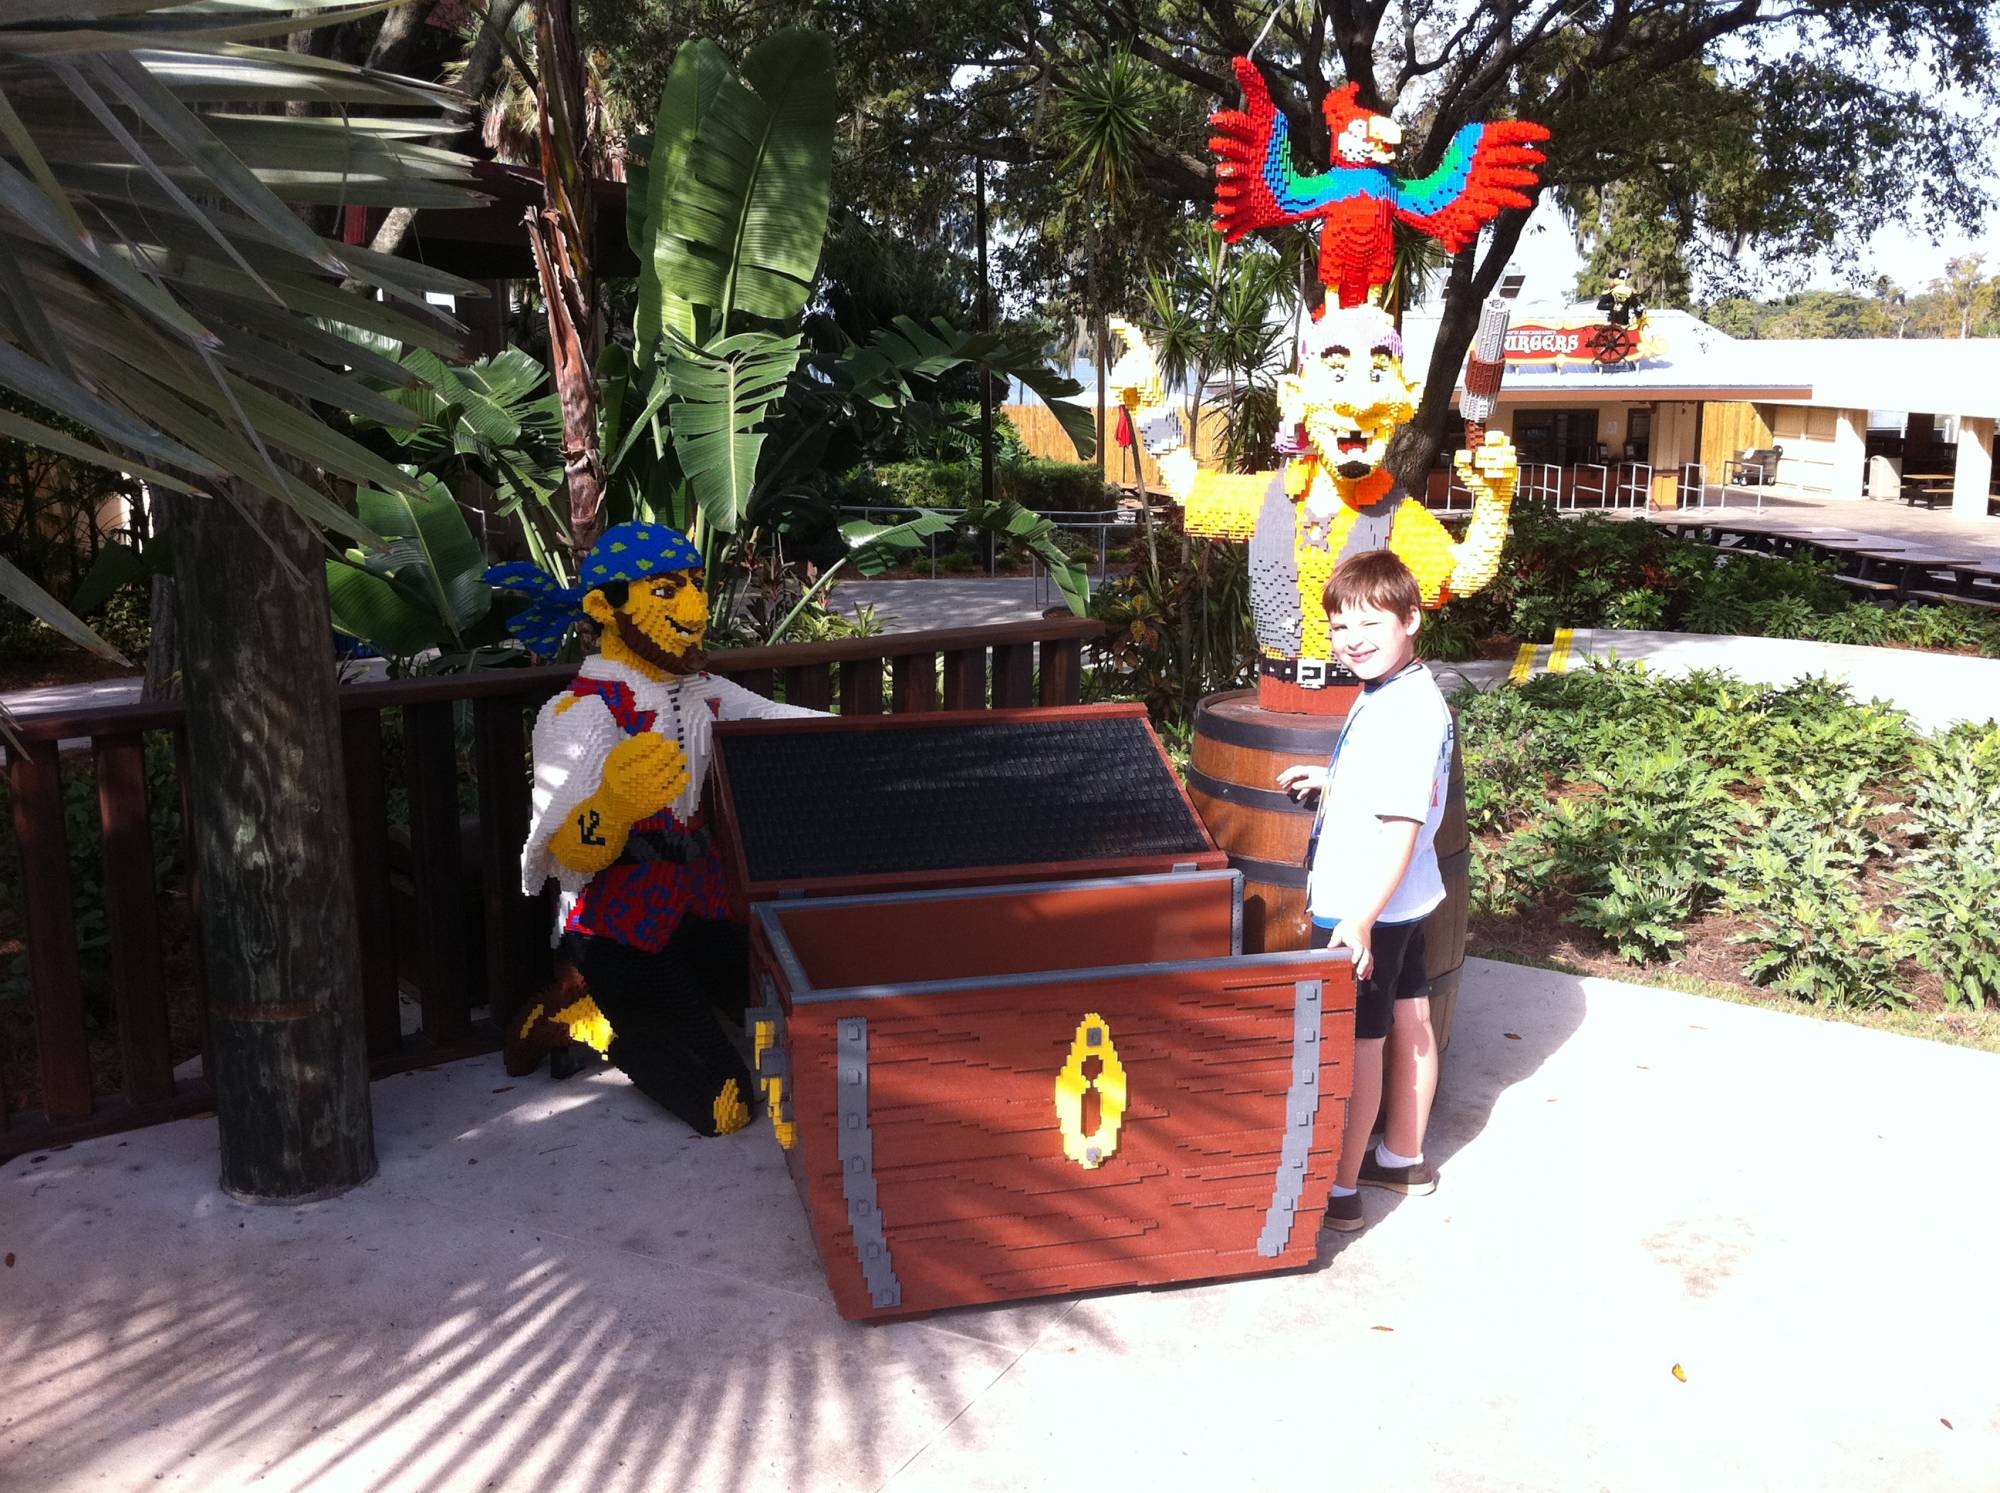 Pirate's Cove Photo Op at LEGOLAND Florida